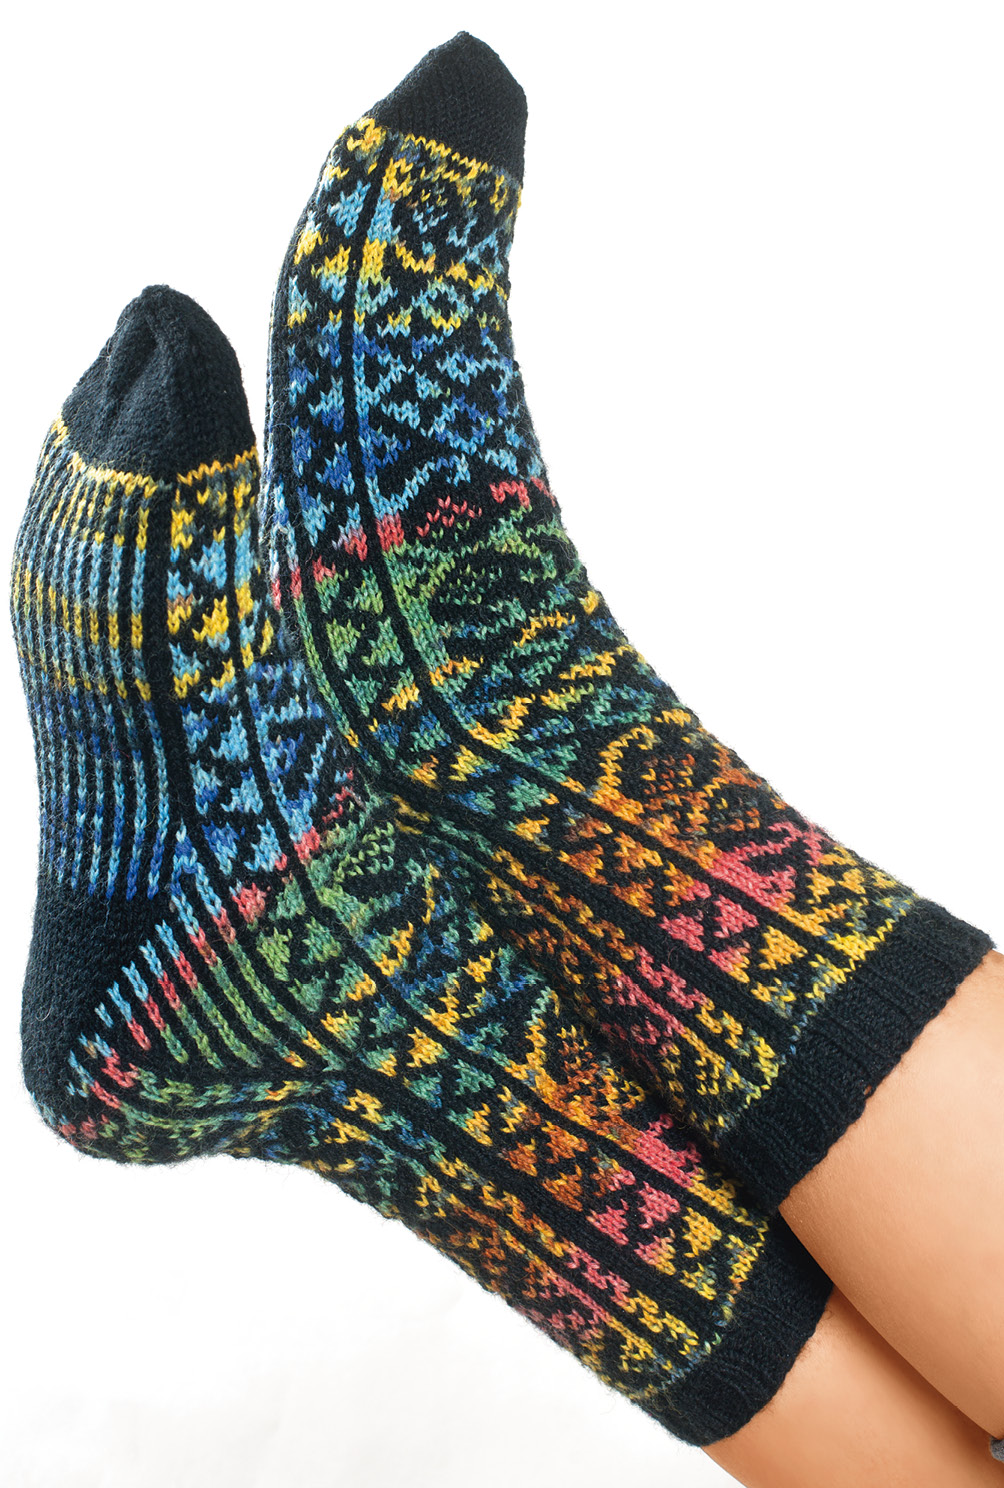 Socken mit Farbverlauf im Jacquardmuster